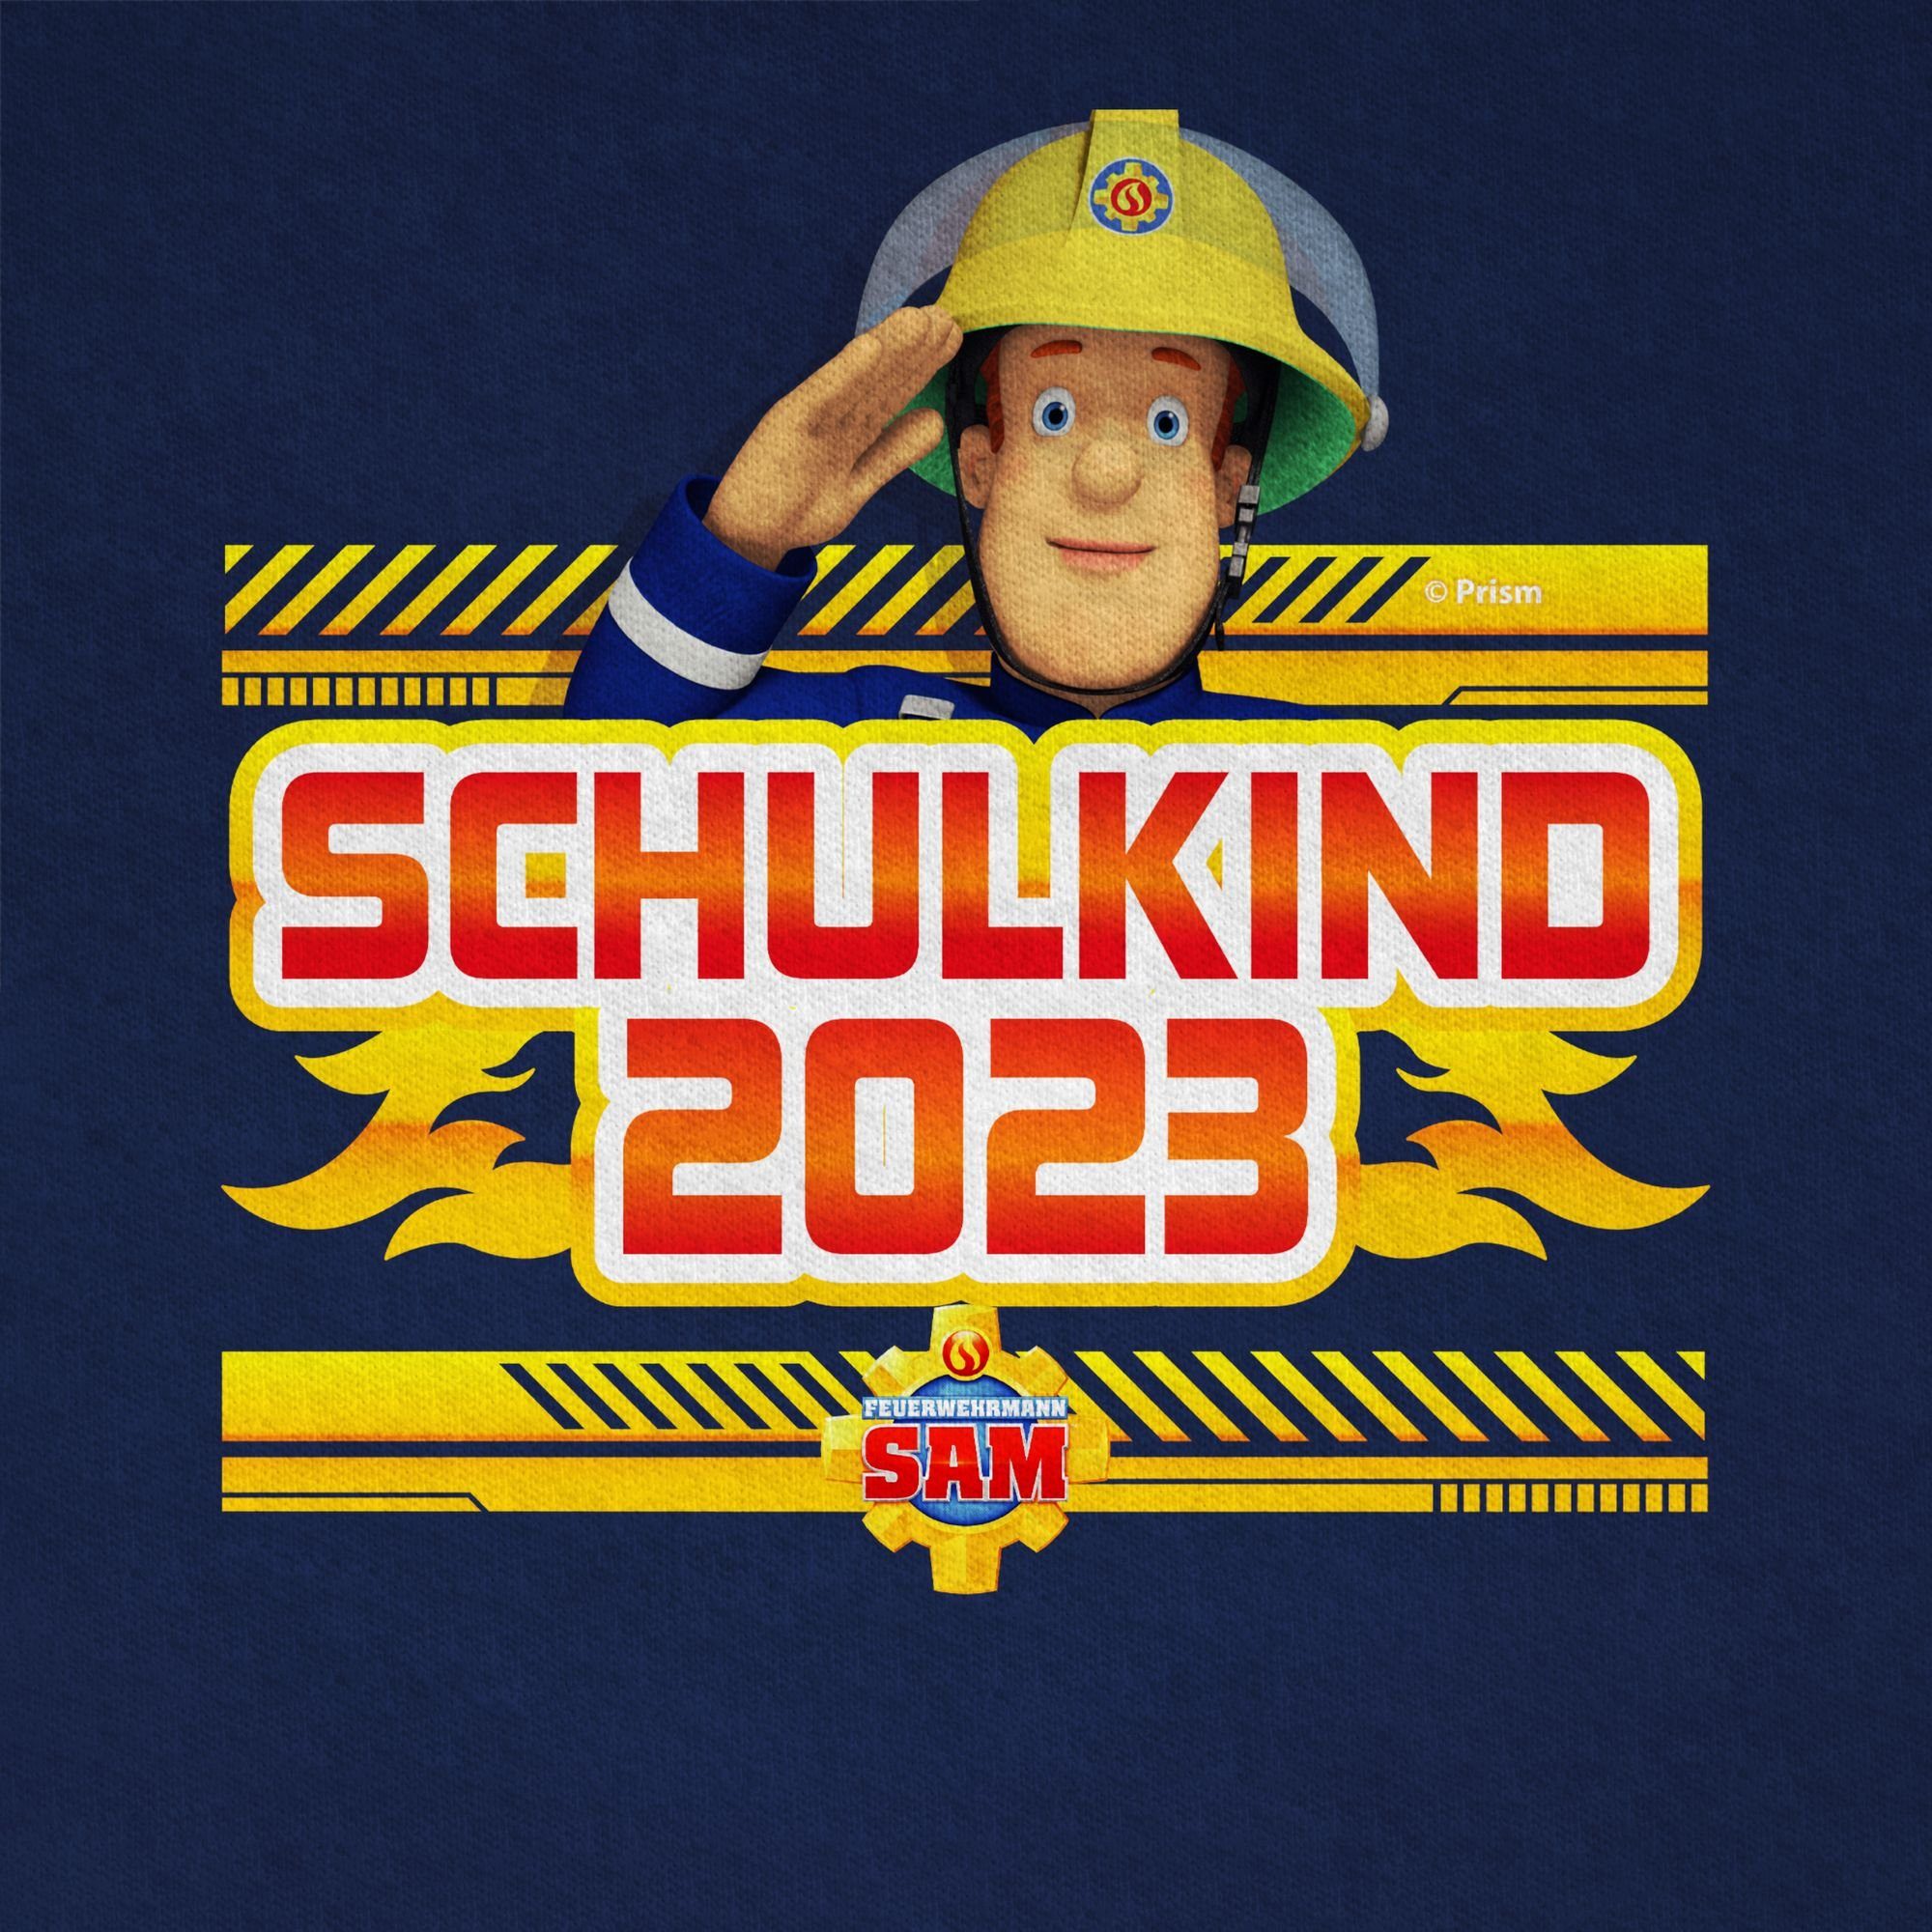 2023 Shirtracer Jungen T-Shirt Sam Einschulung 02 Feuerwehrmann Schulkind Dunkelblau Sam